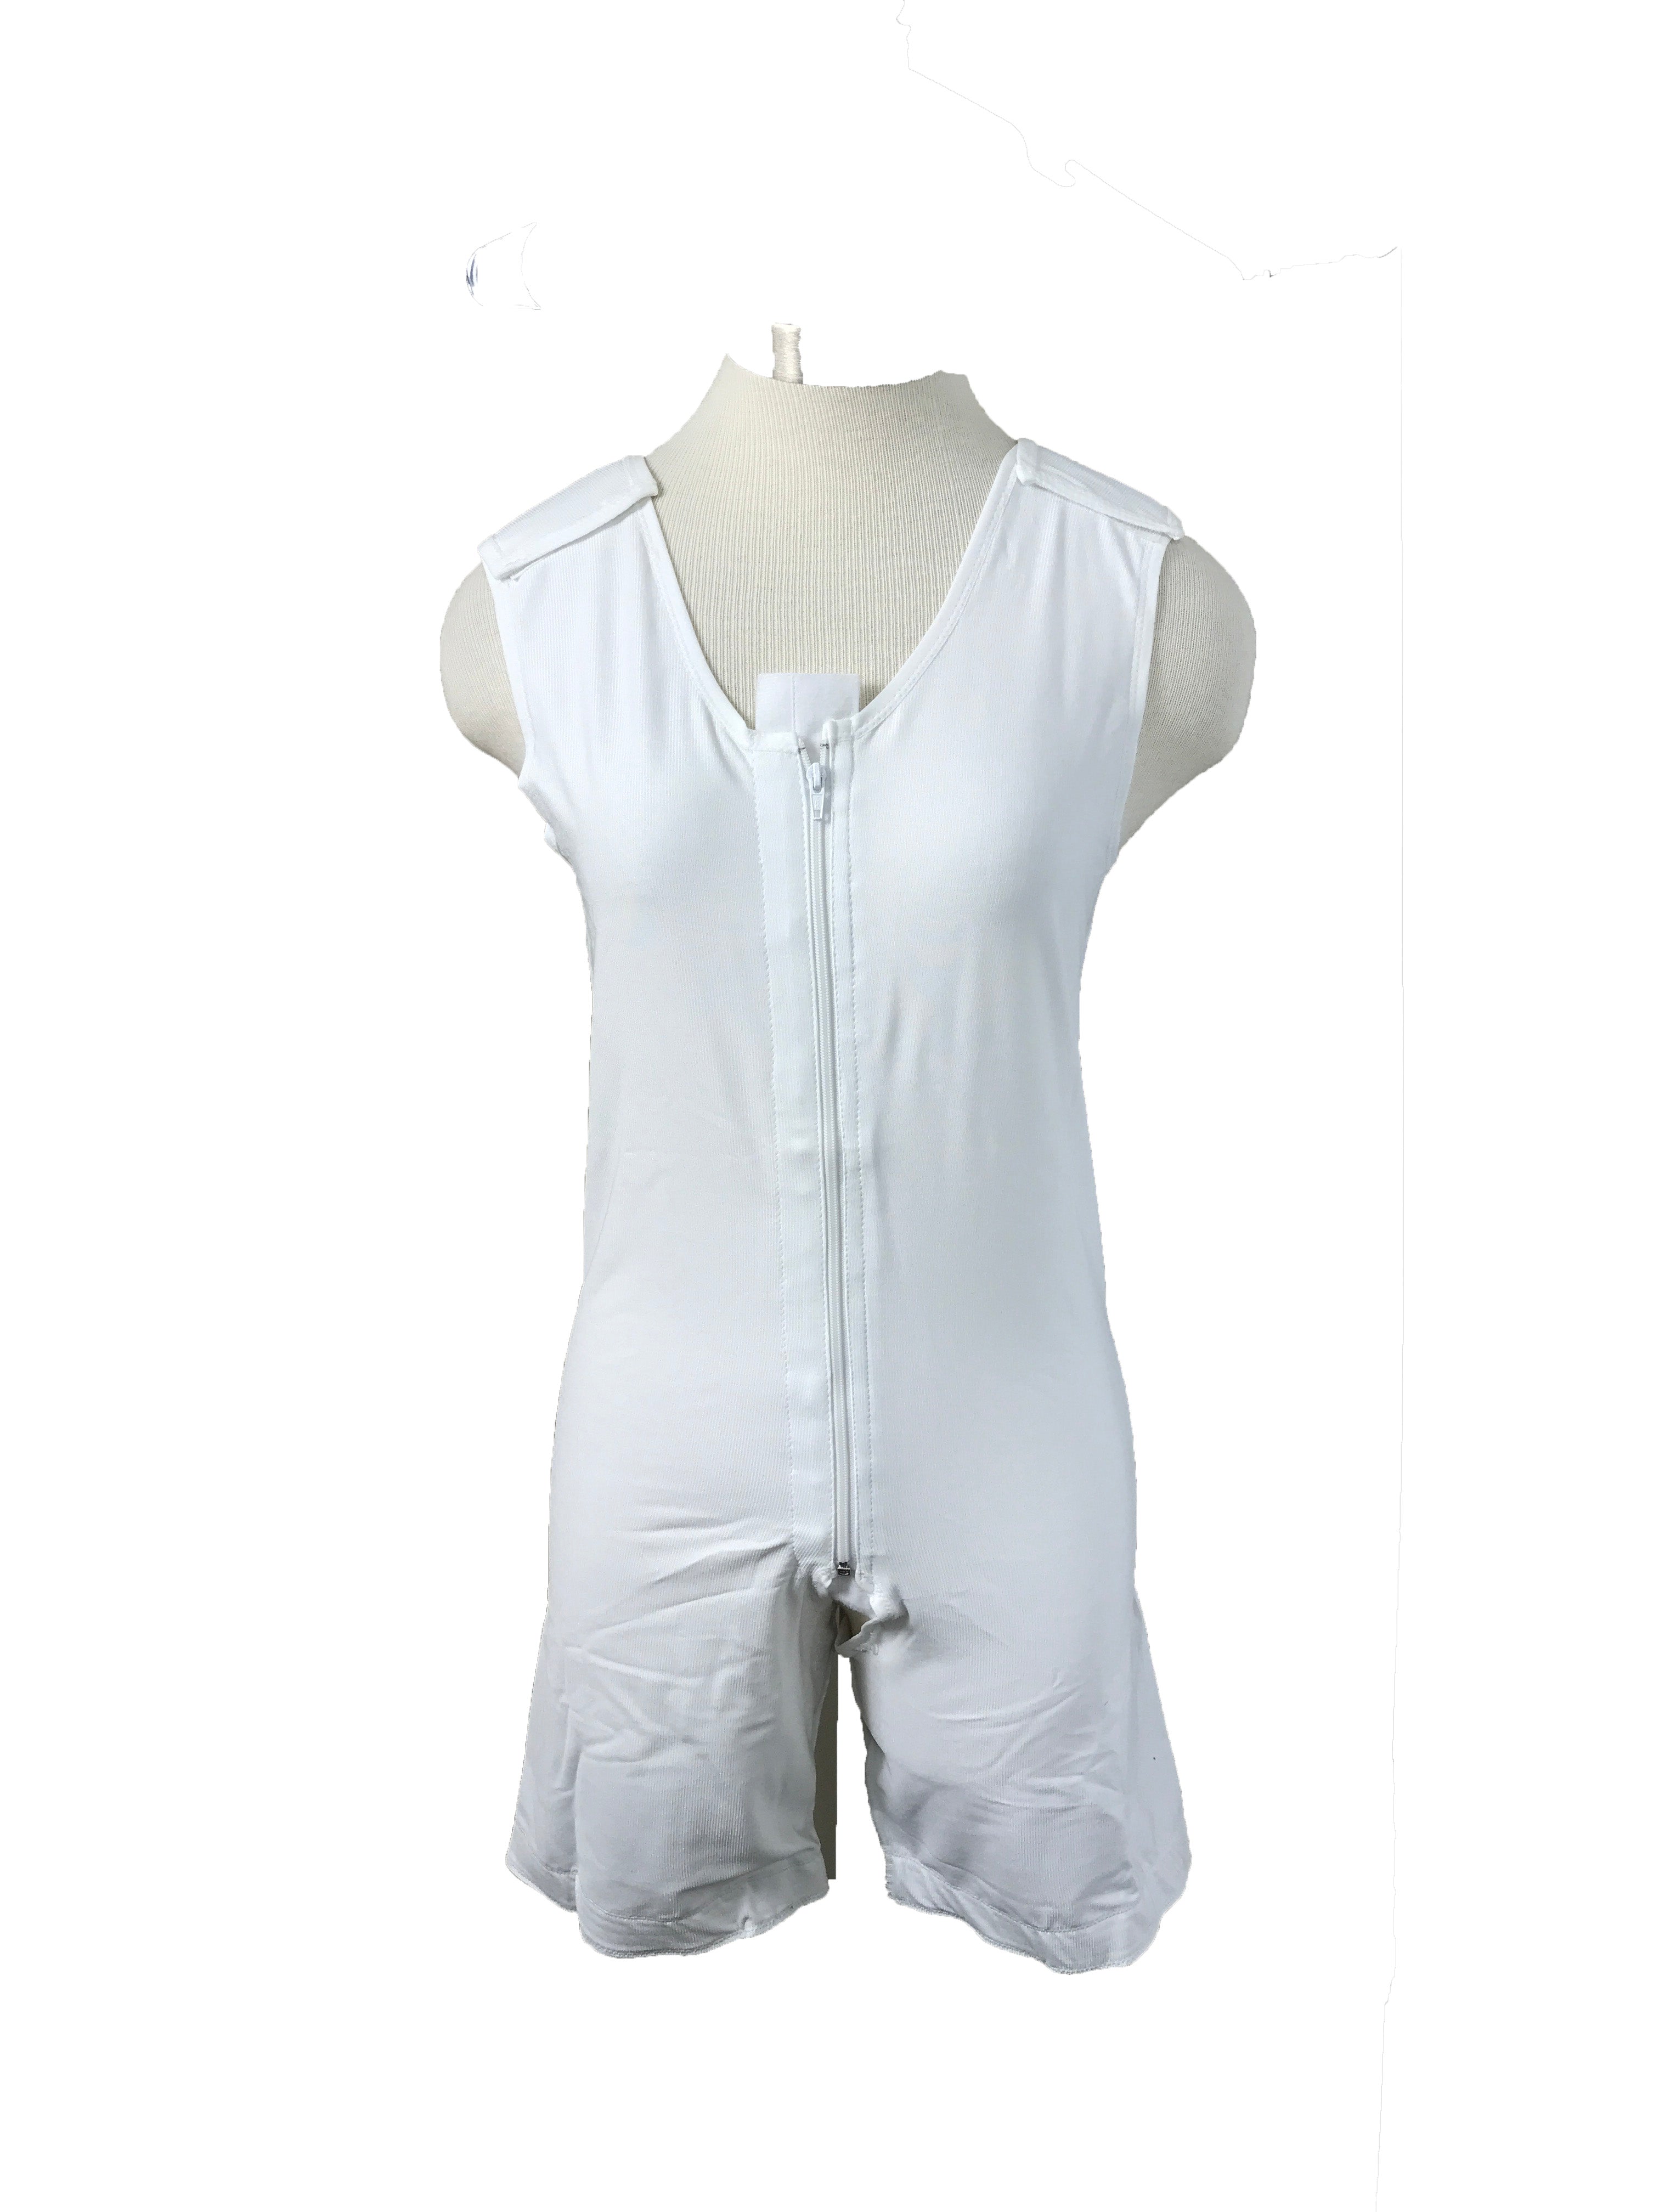 Marena ComfortWear Compression and Support Garment White Bodysuit Men's Size 3XL